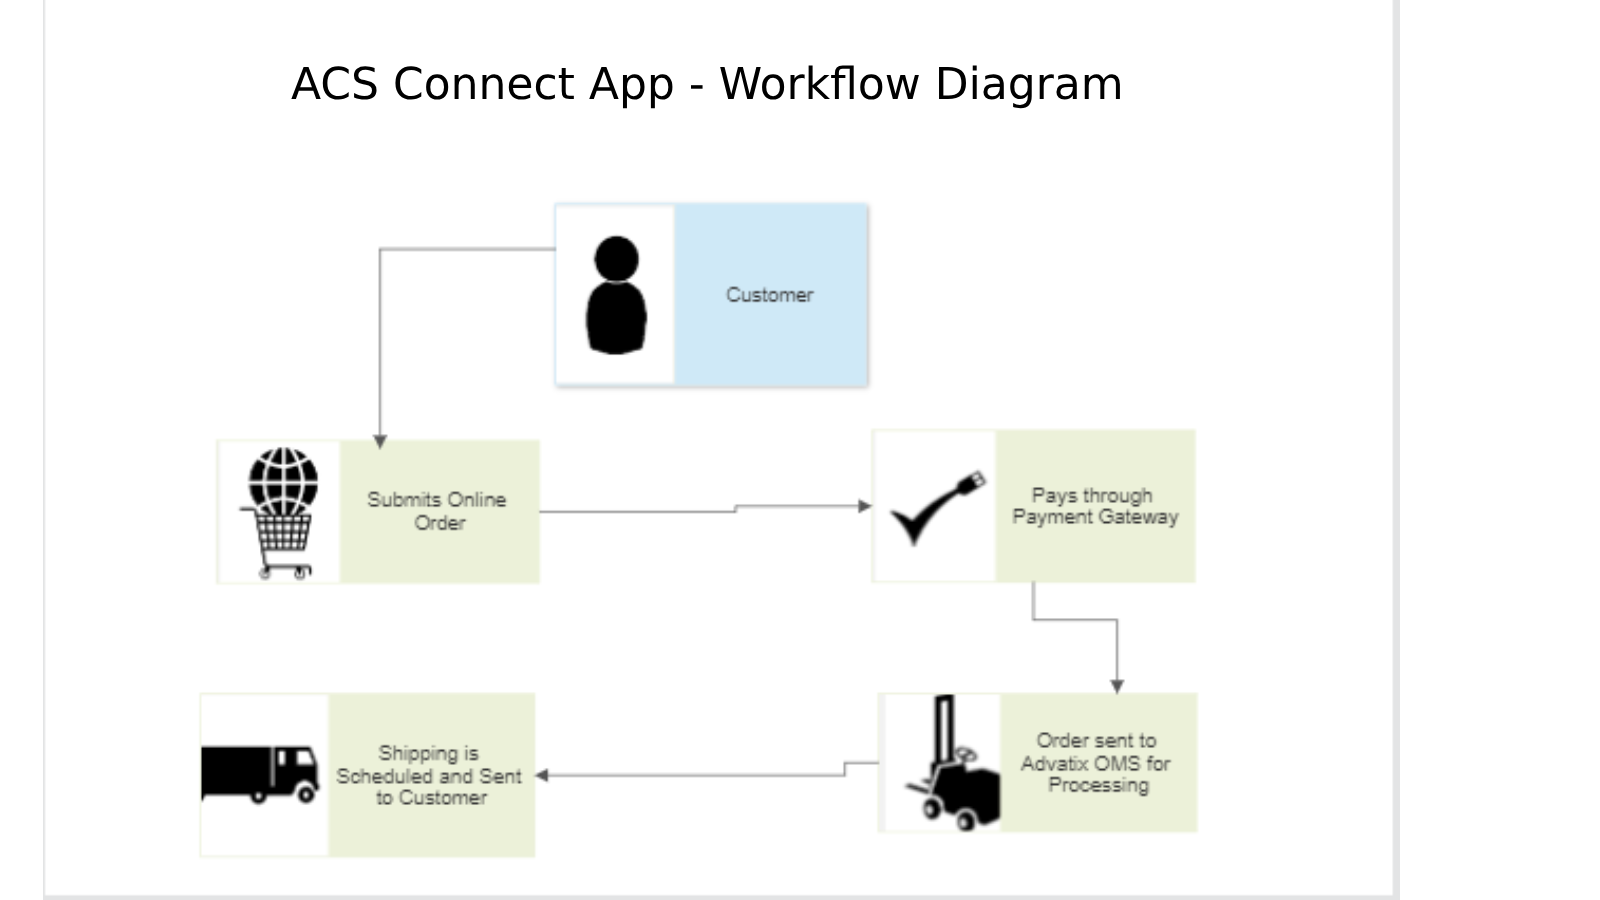 App workflow